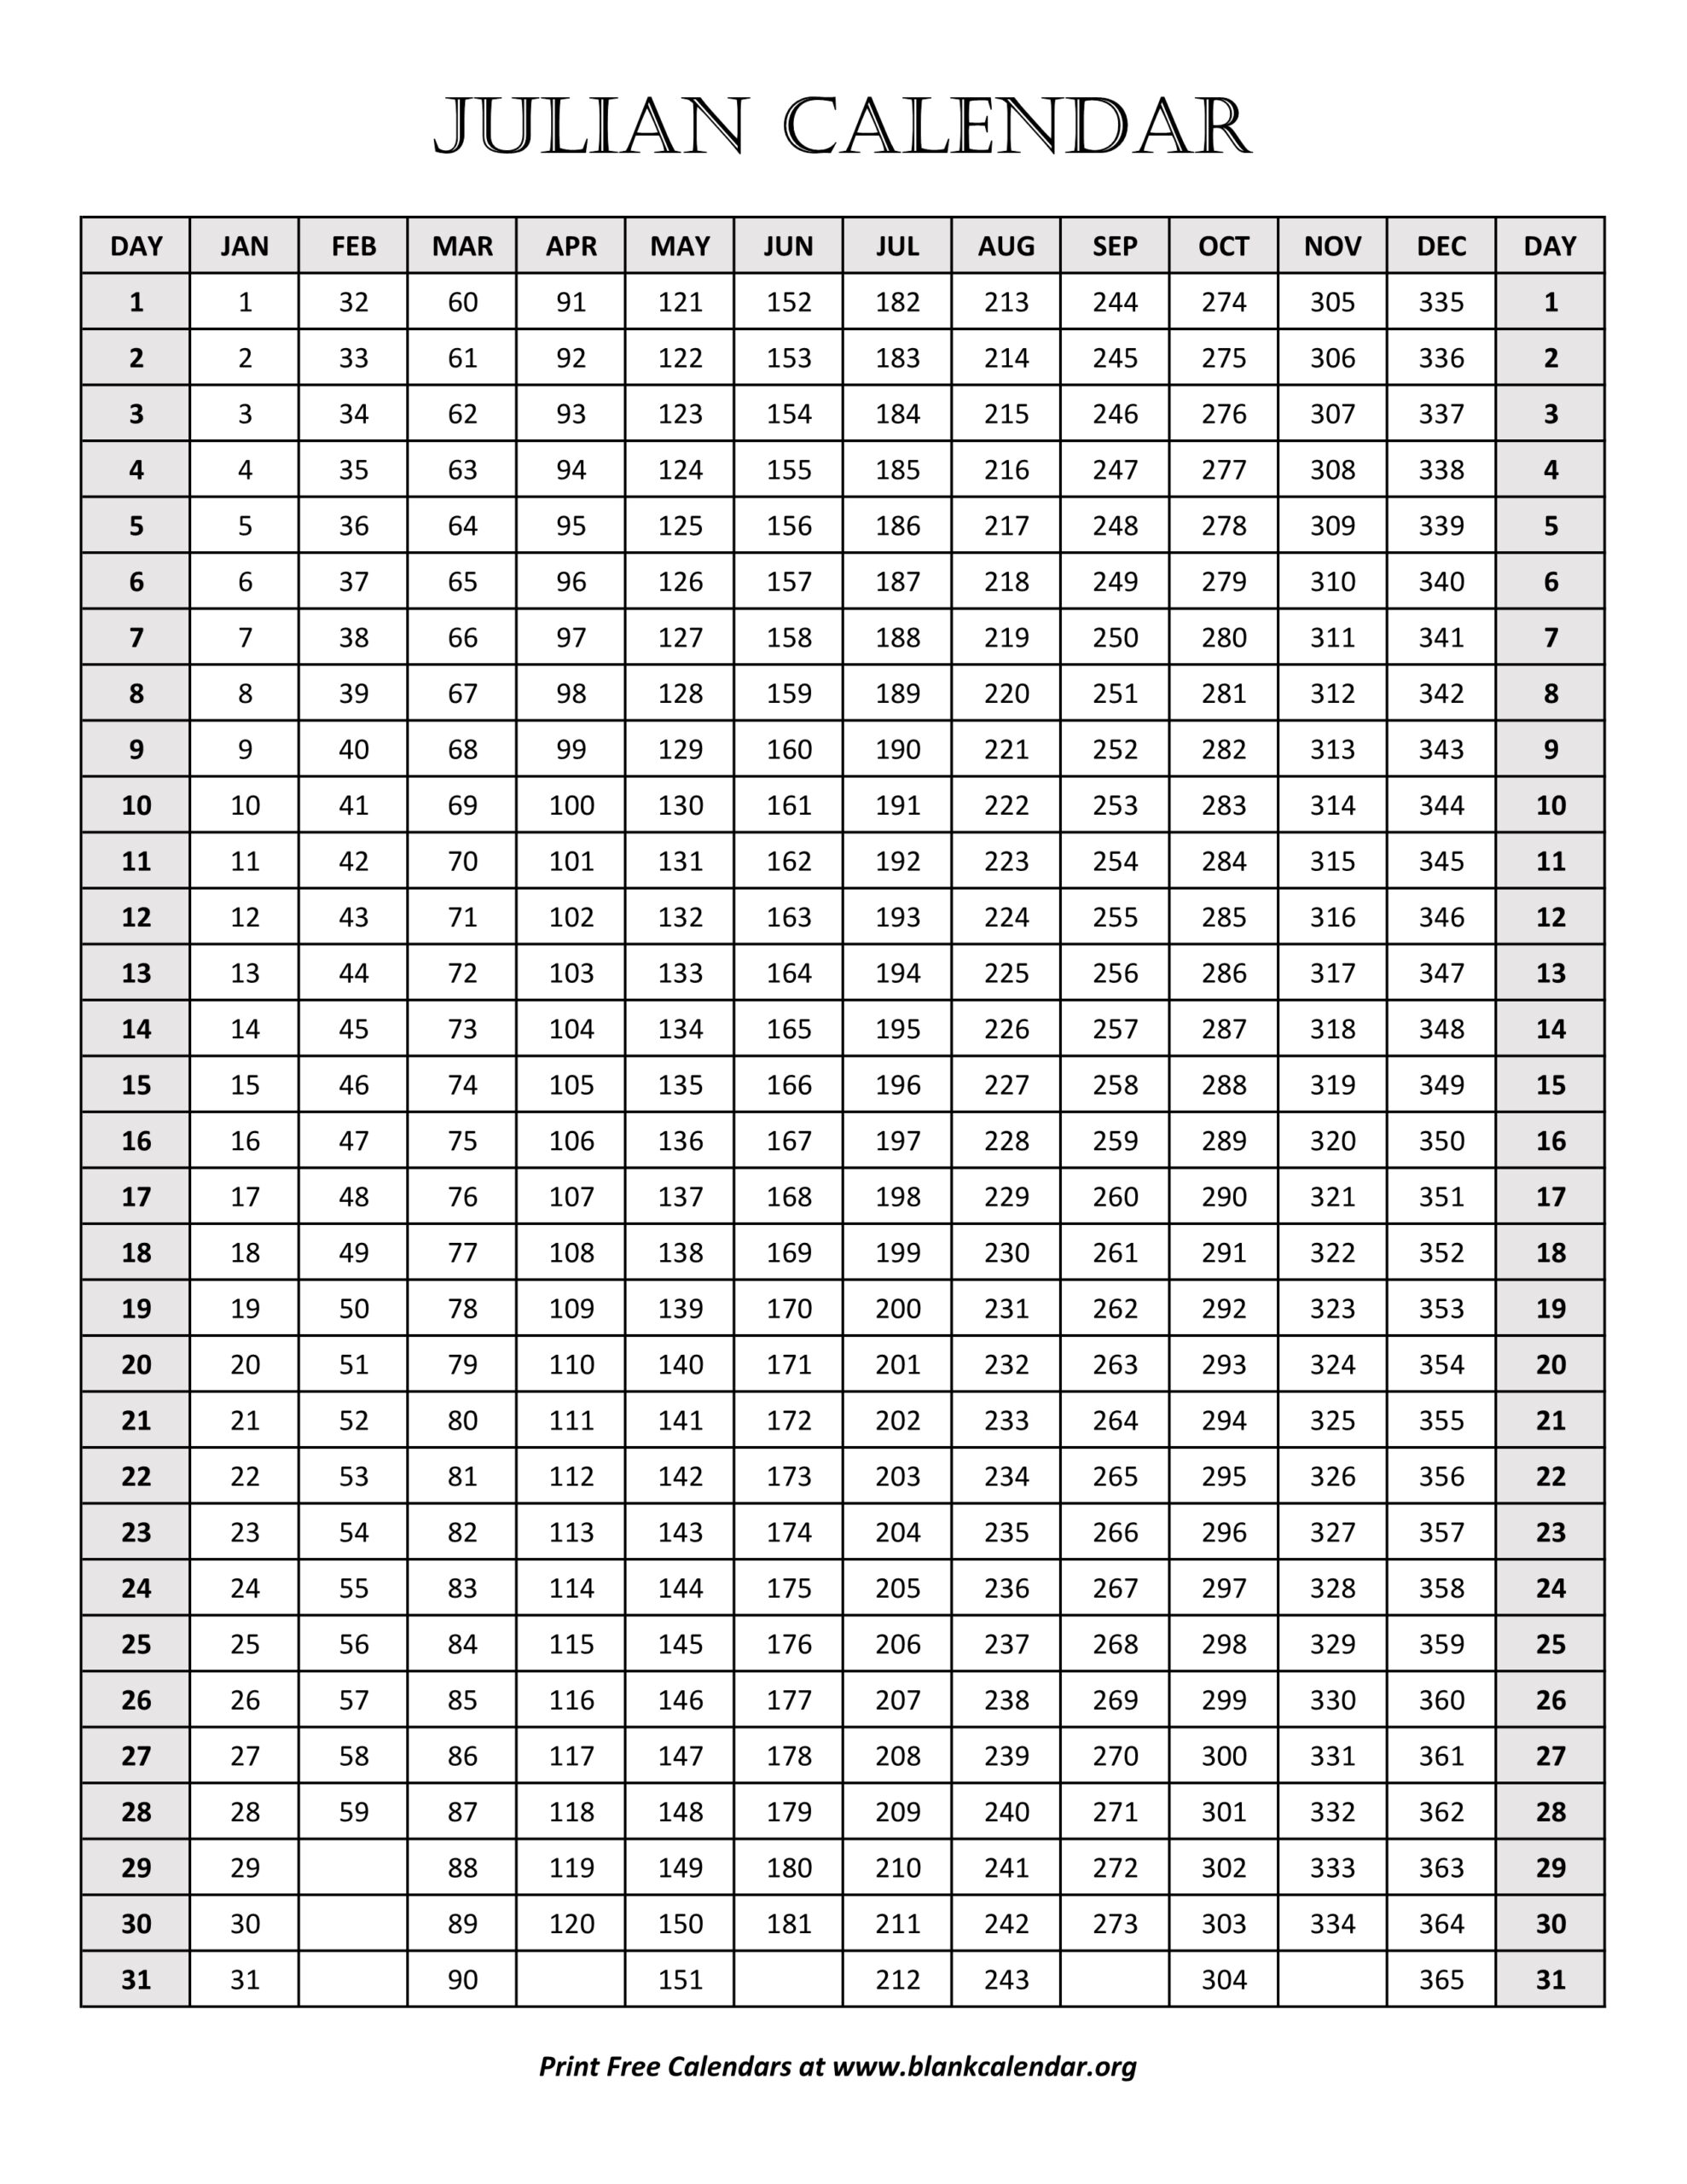 Julian Calendar 2024 Calendar 2024 - Free Printable 2024 Julian Calendar With Holidays